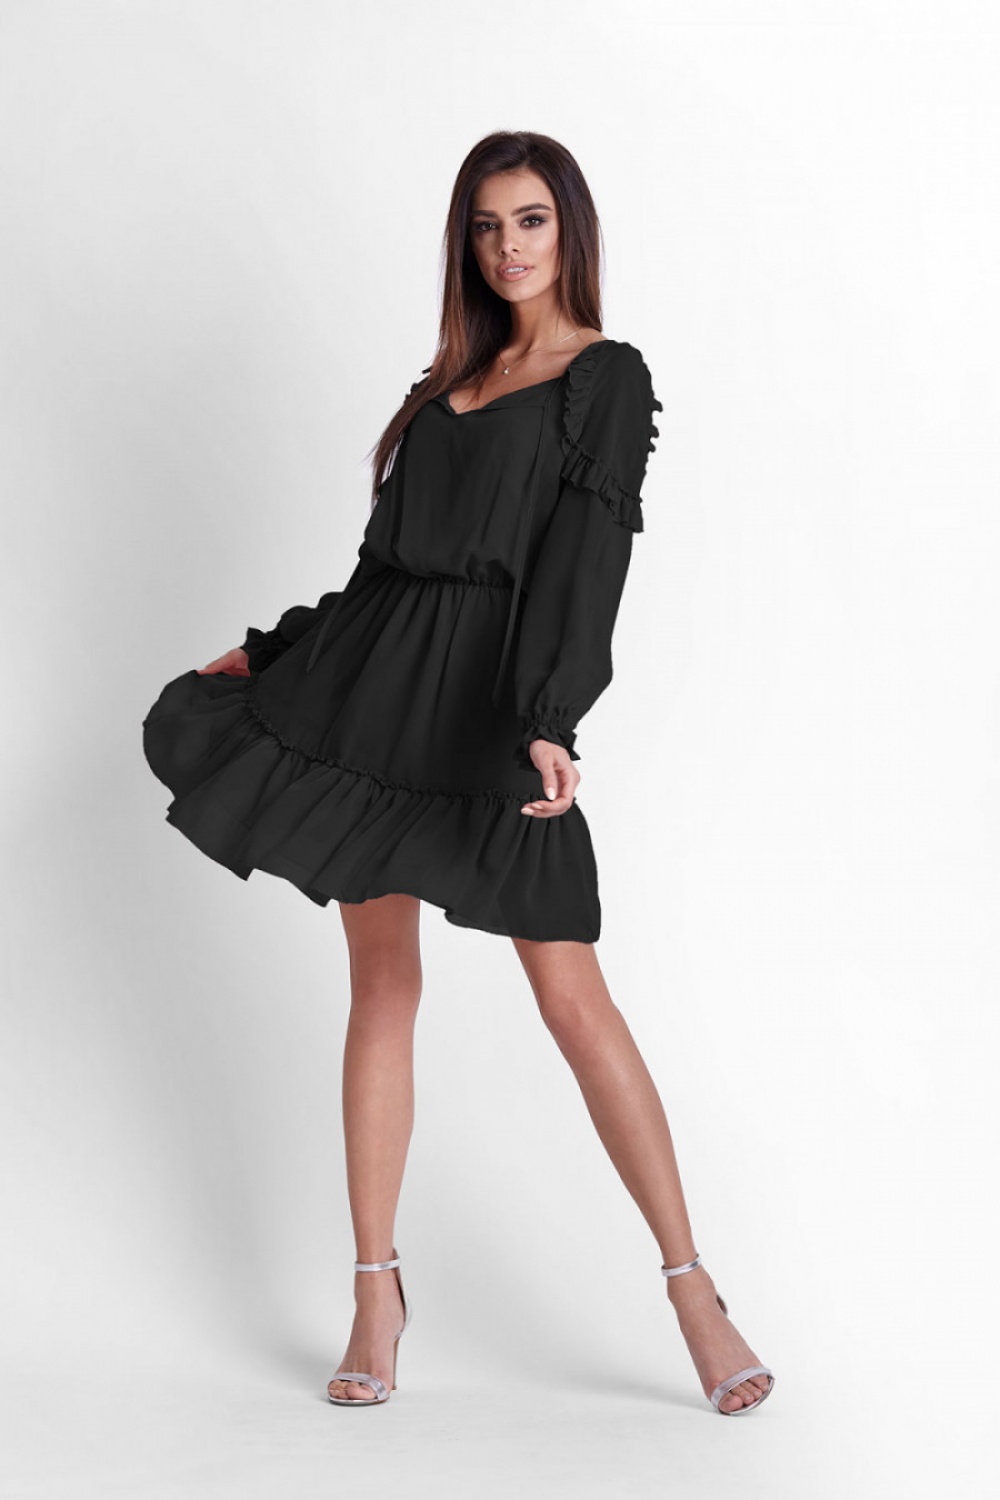  Cocktail dress model 128395 IVON  black